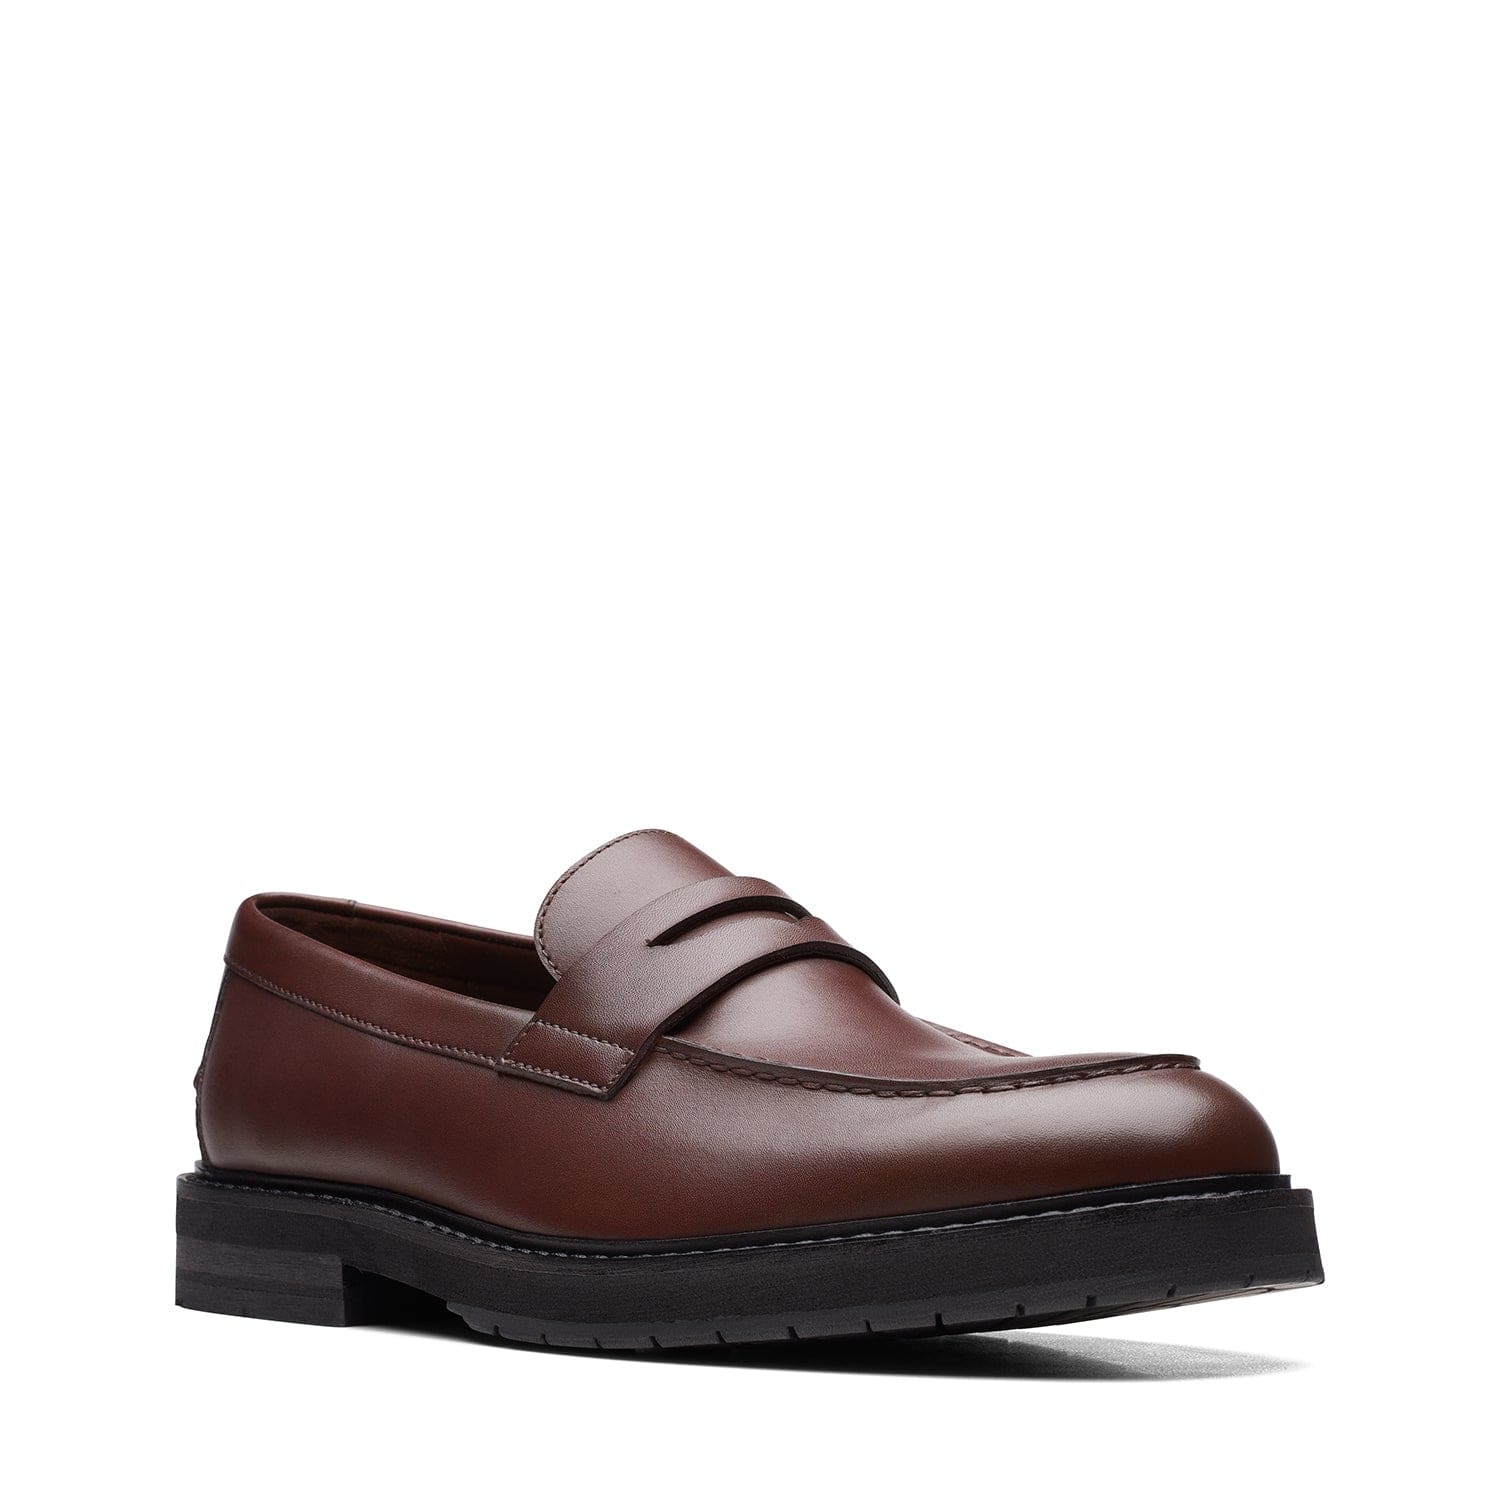 Clarks Craftnorth Lo - Shoes - British Tan Lea - 261709037 - G Width (Standard Fit)